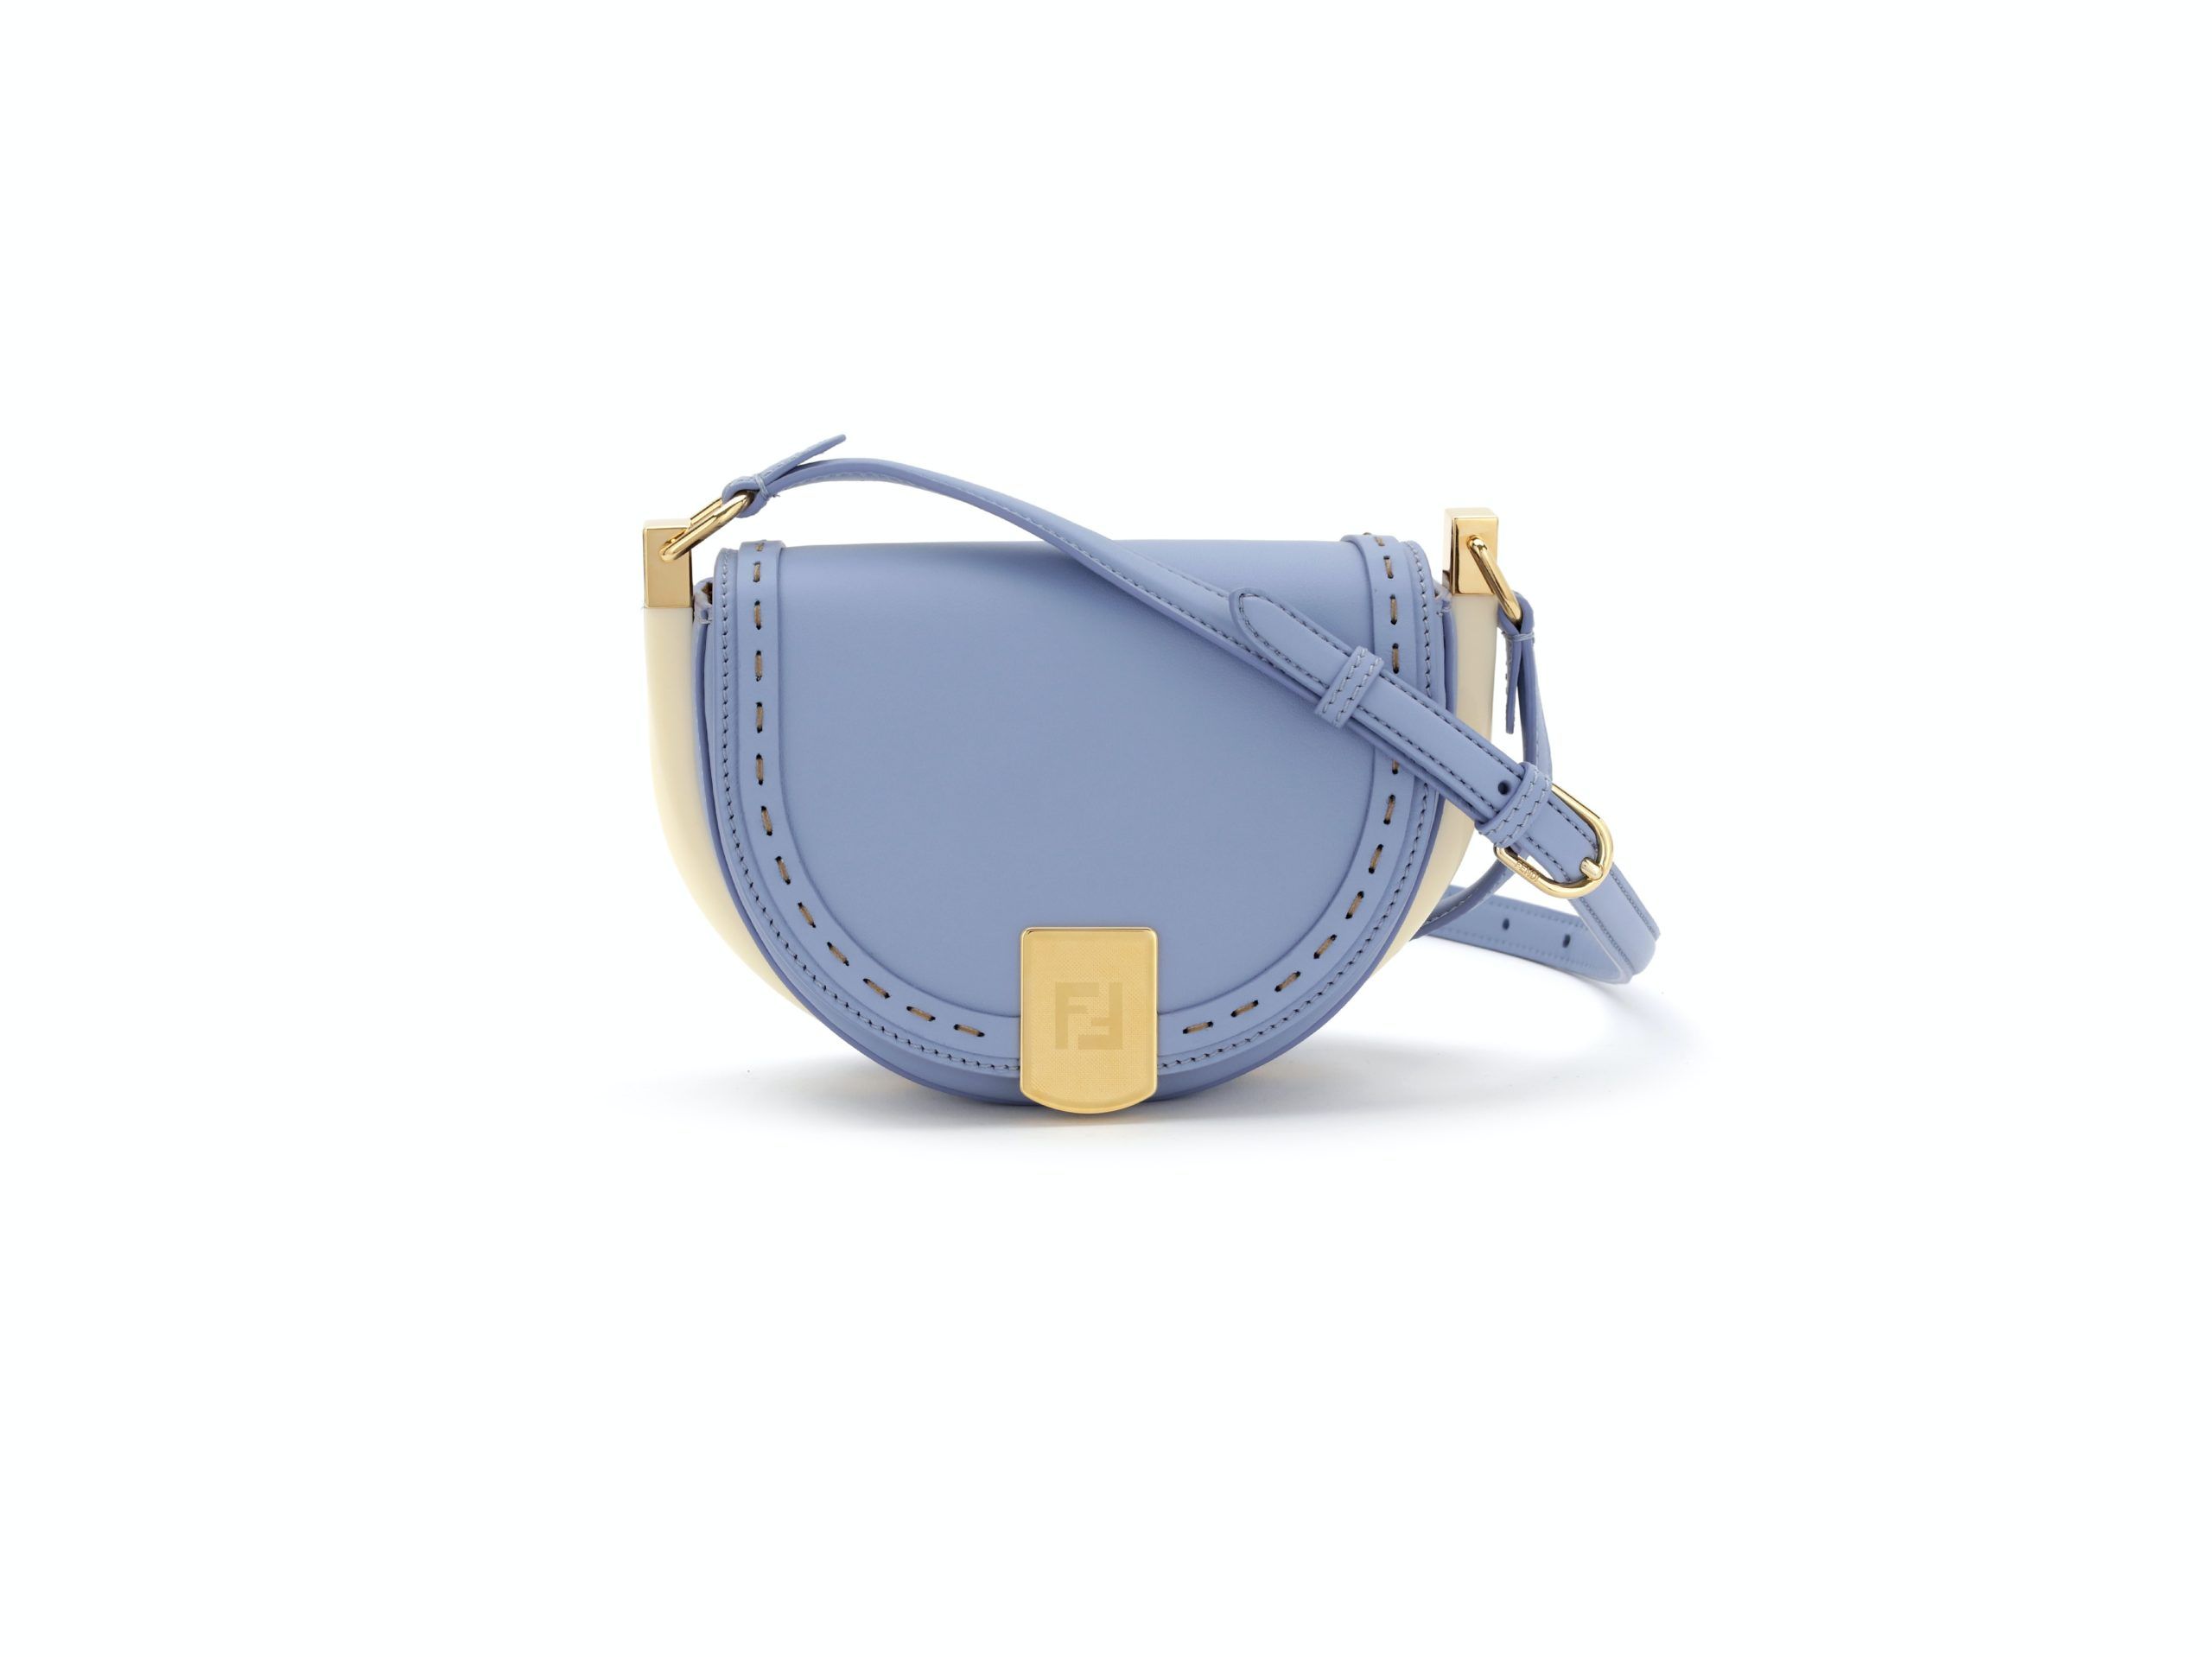 Shop the new Spring/Summer 2021 Moonlight bag from Fendi